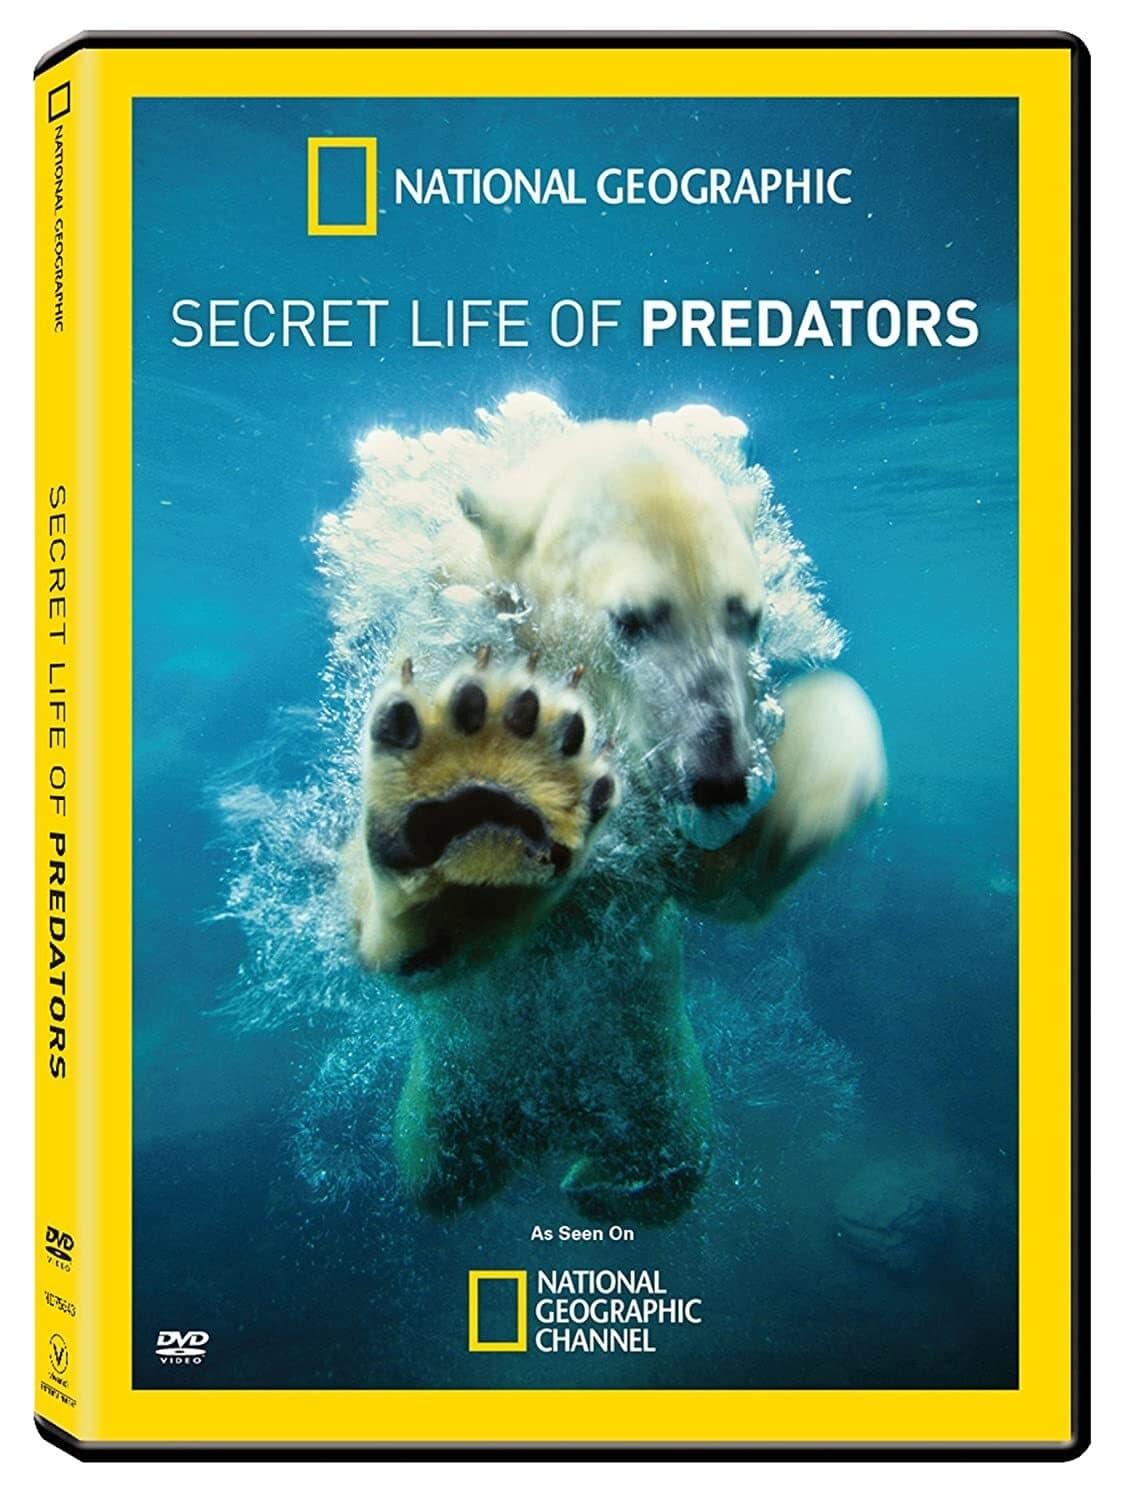 Secret Life of Predators poster